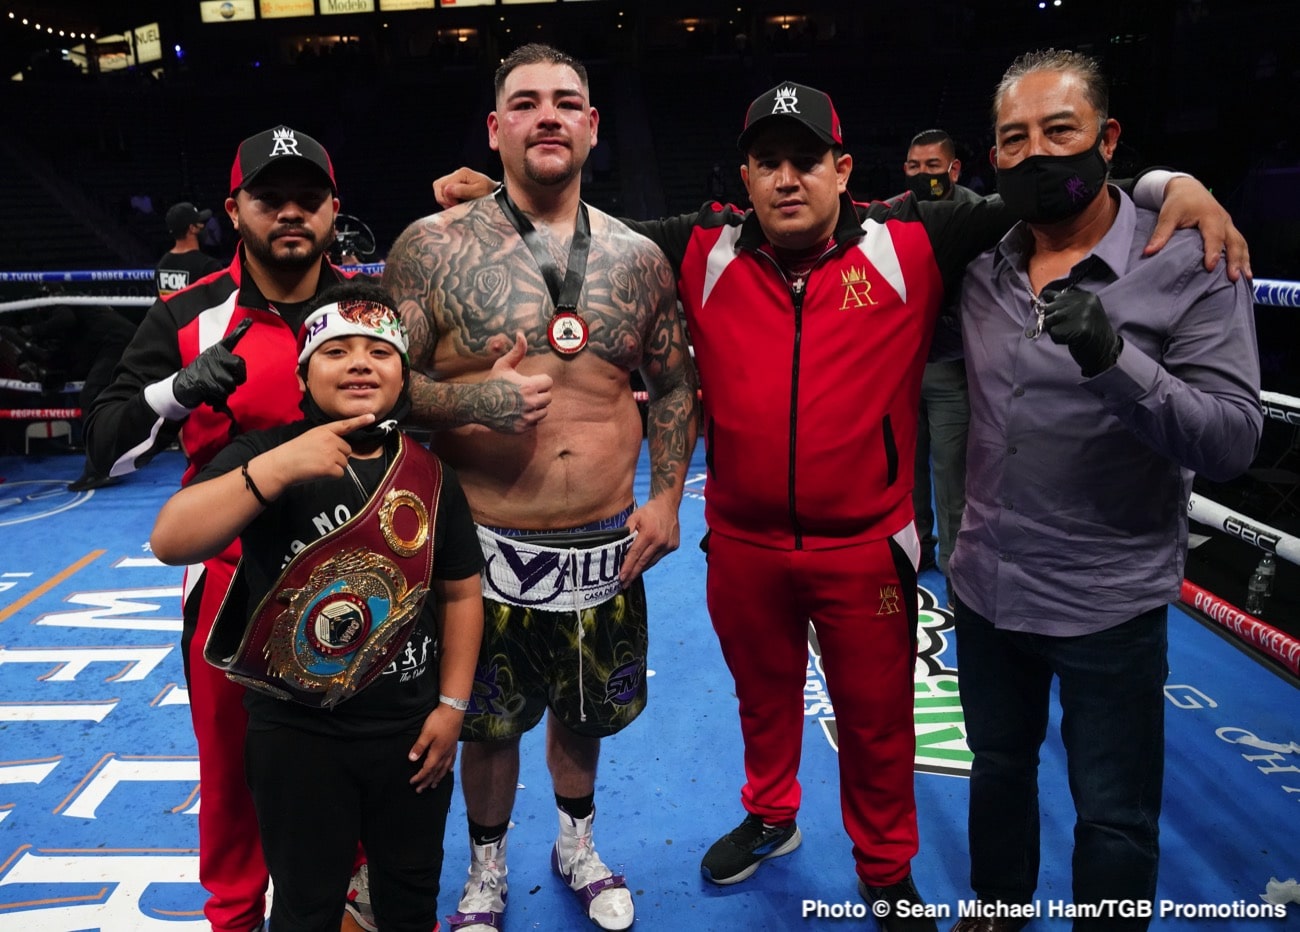 Andy Ruiz Jr, Chris Arreola, Eddy Reynoso boxing image / photo